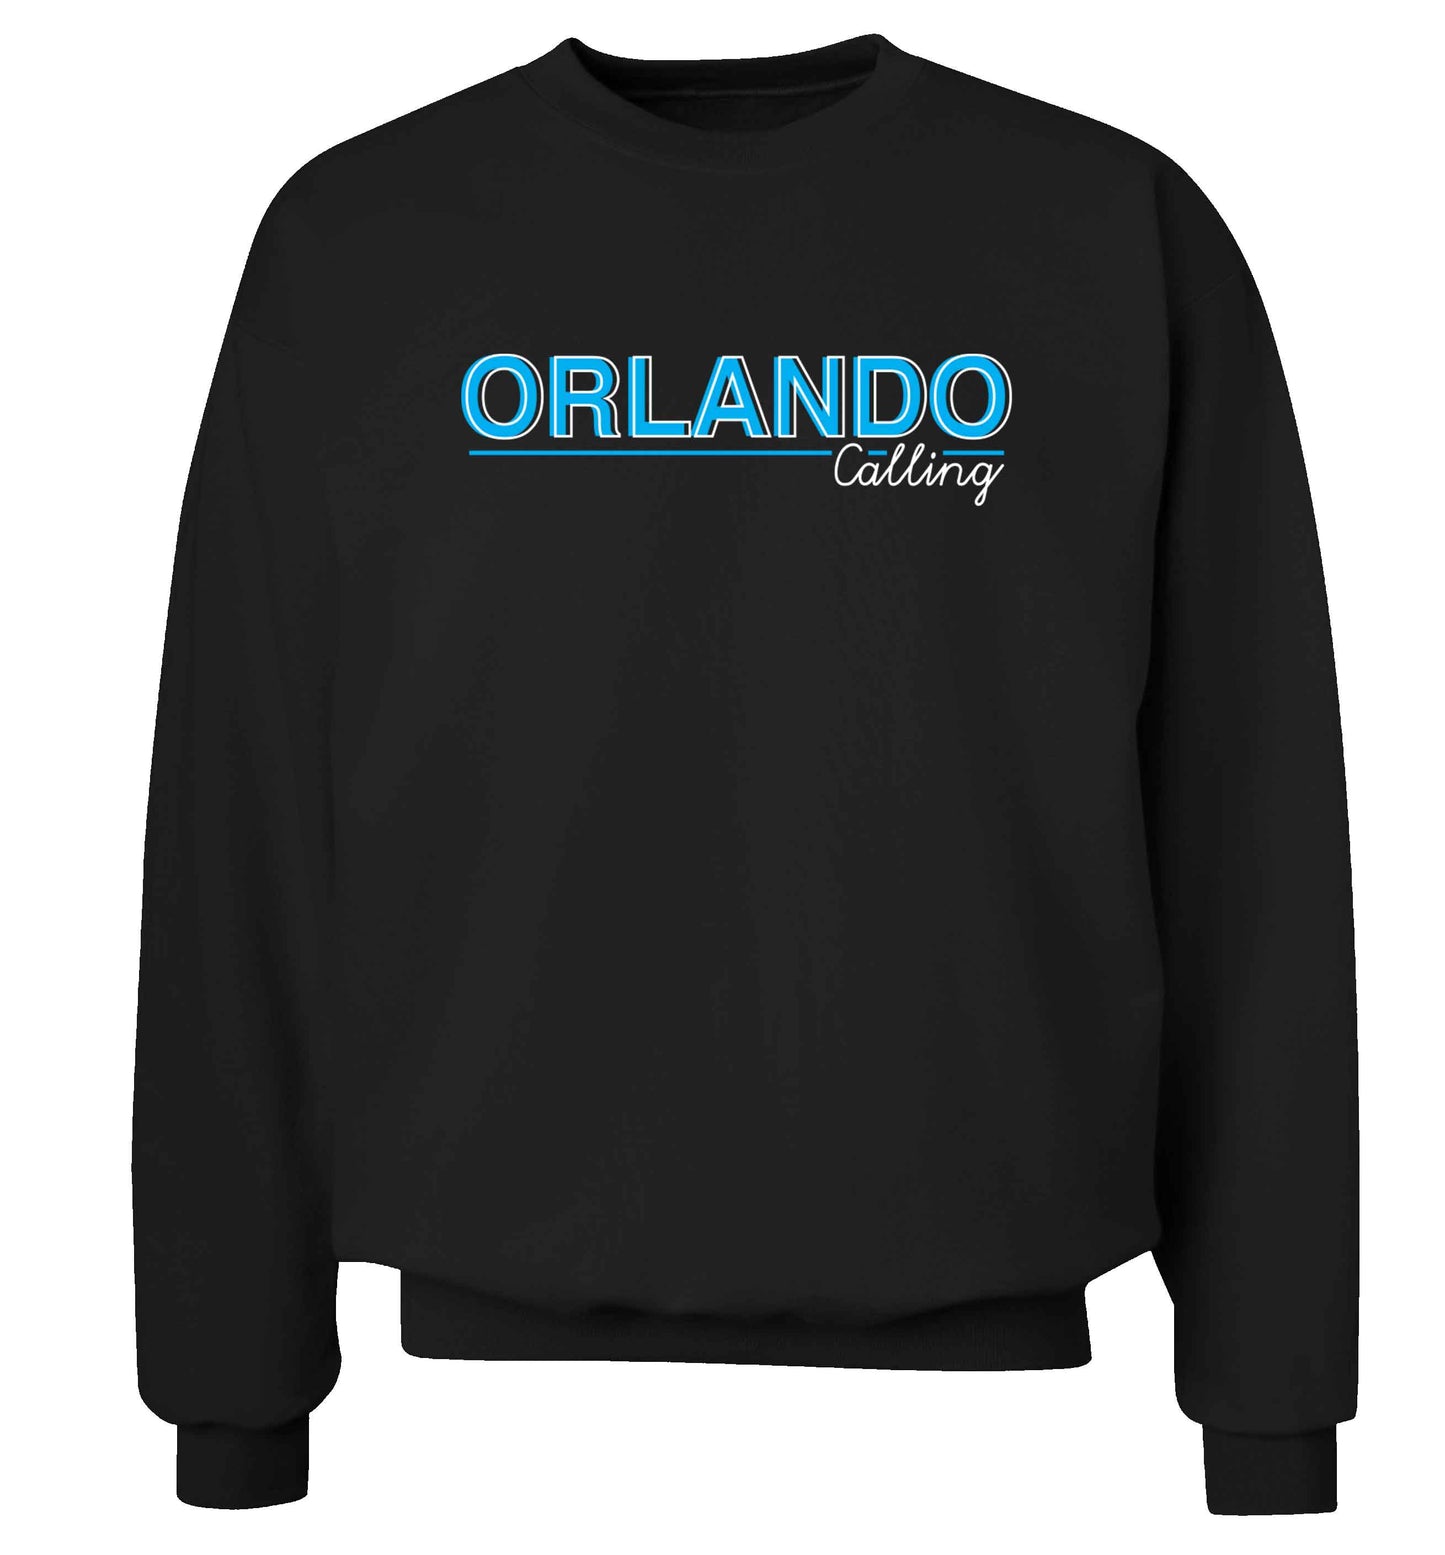 Orlando calling Adult's unisex black Sweater 2XL